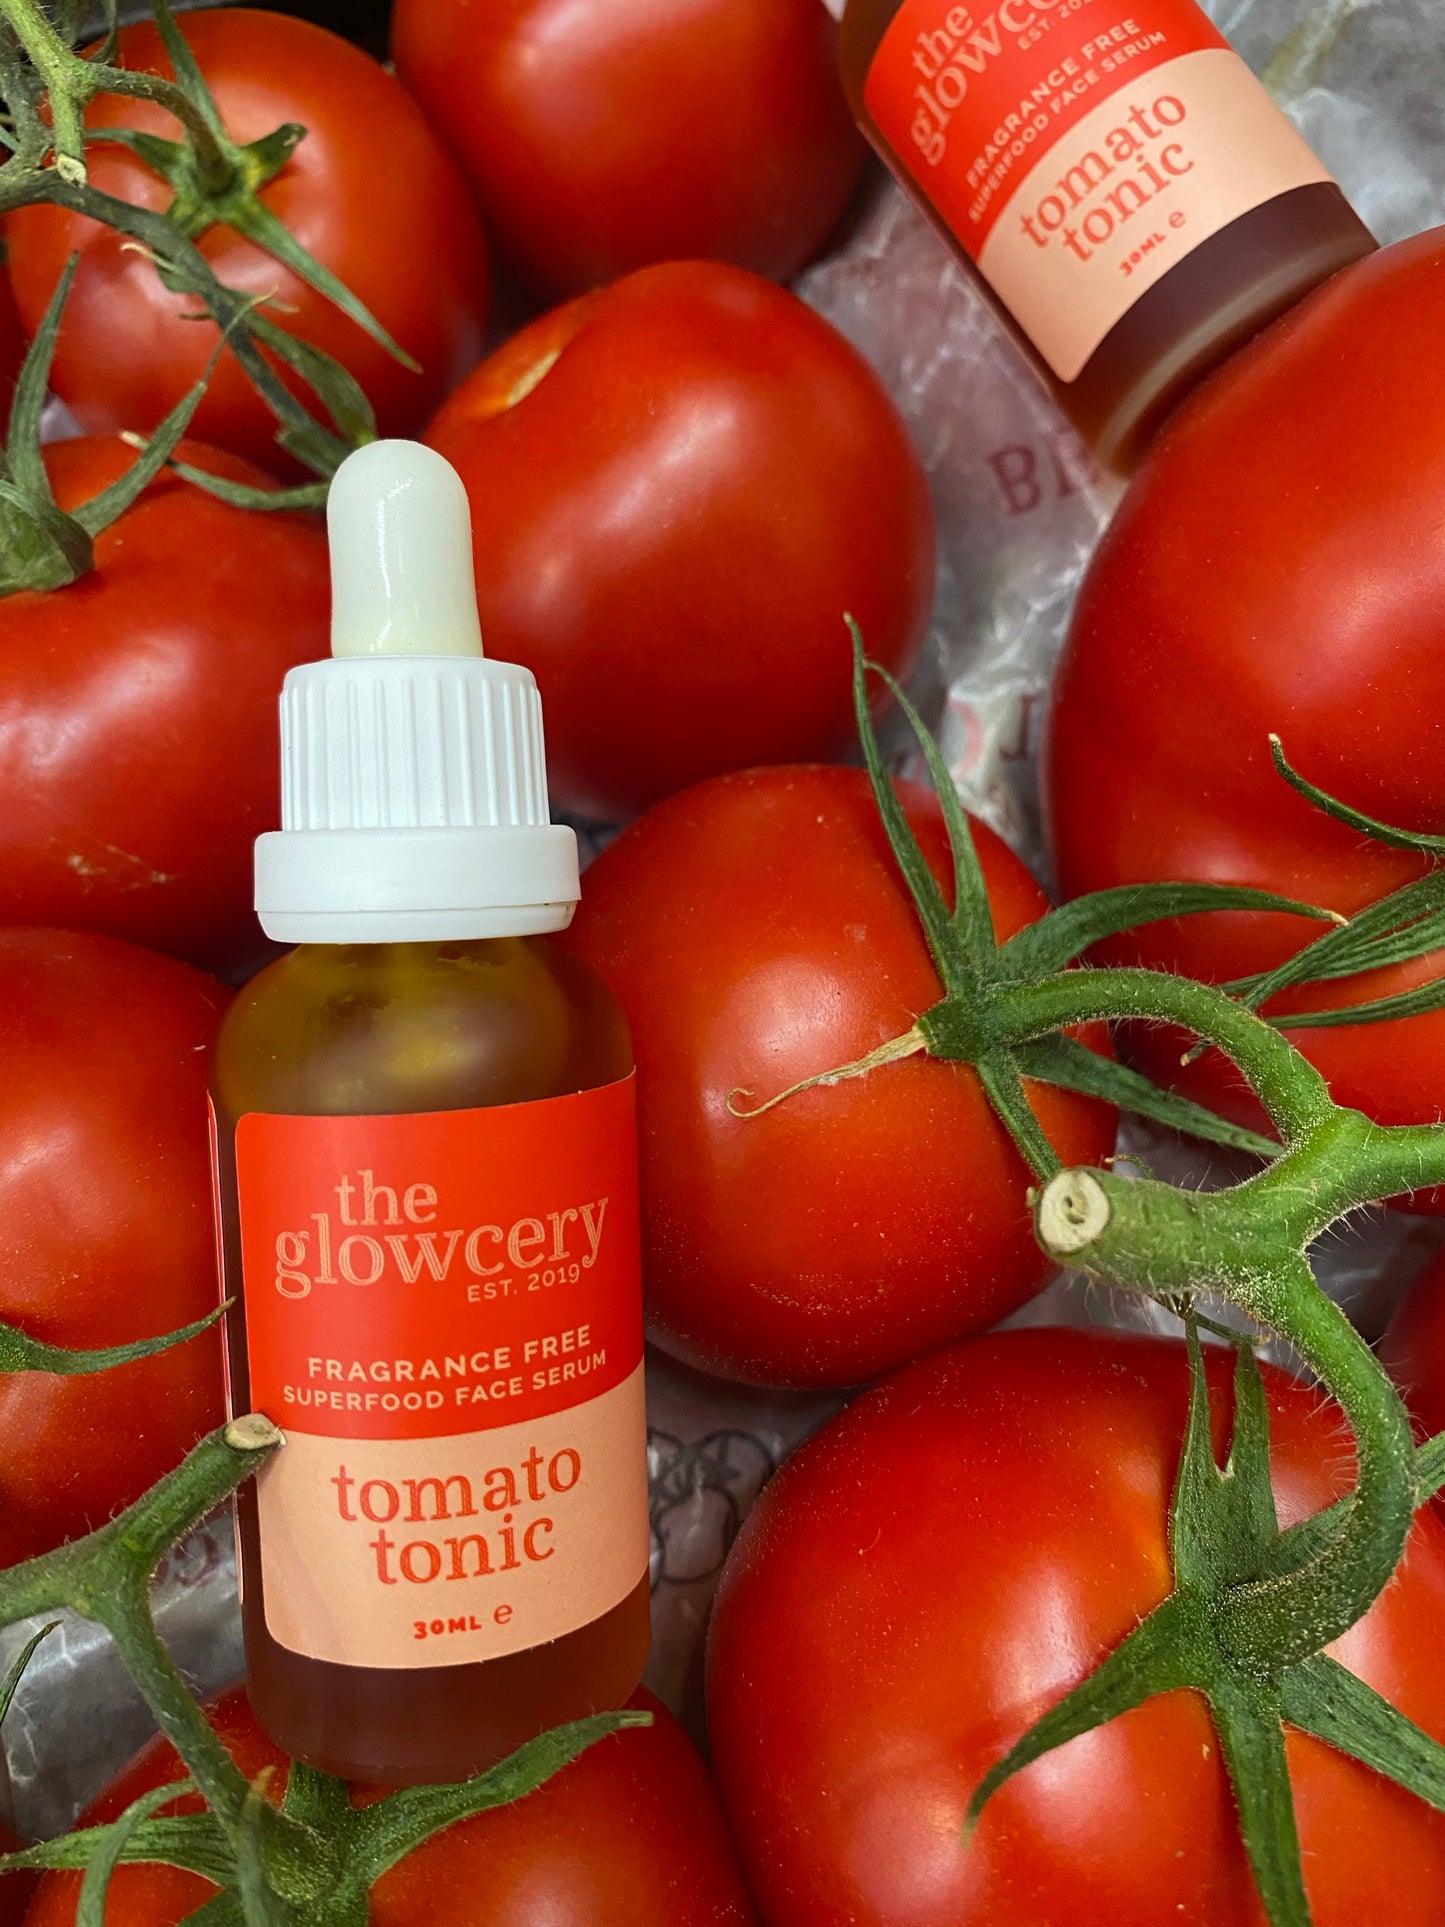 Tomato Tonic Fragrance-Free Superfood Facial Serum